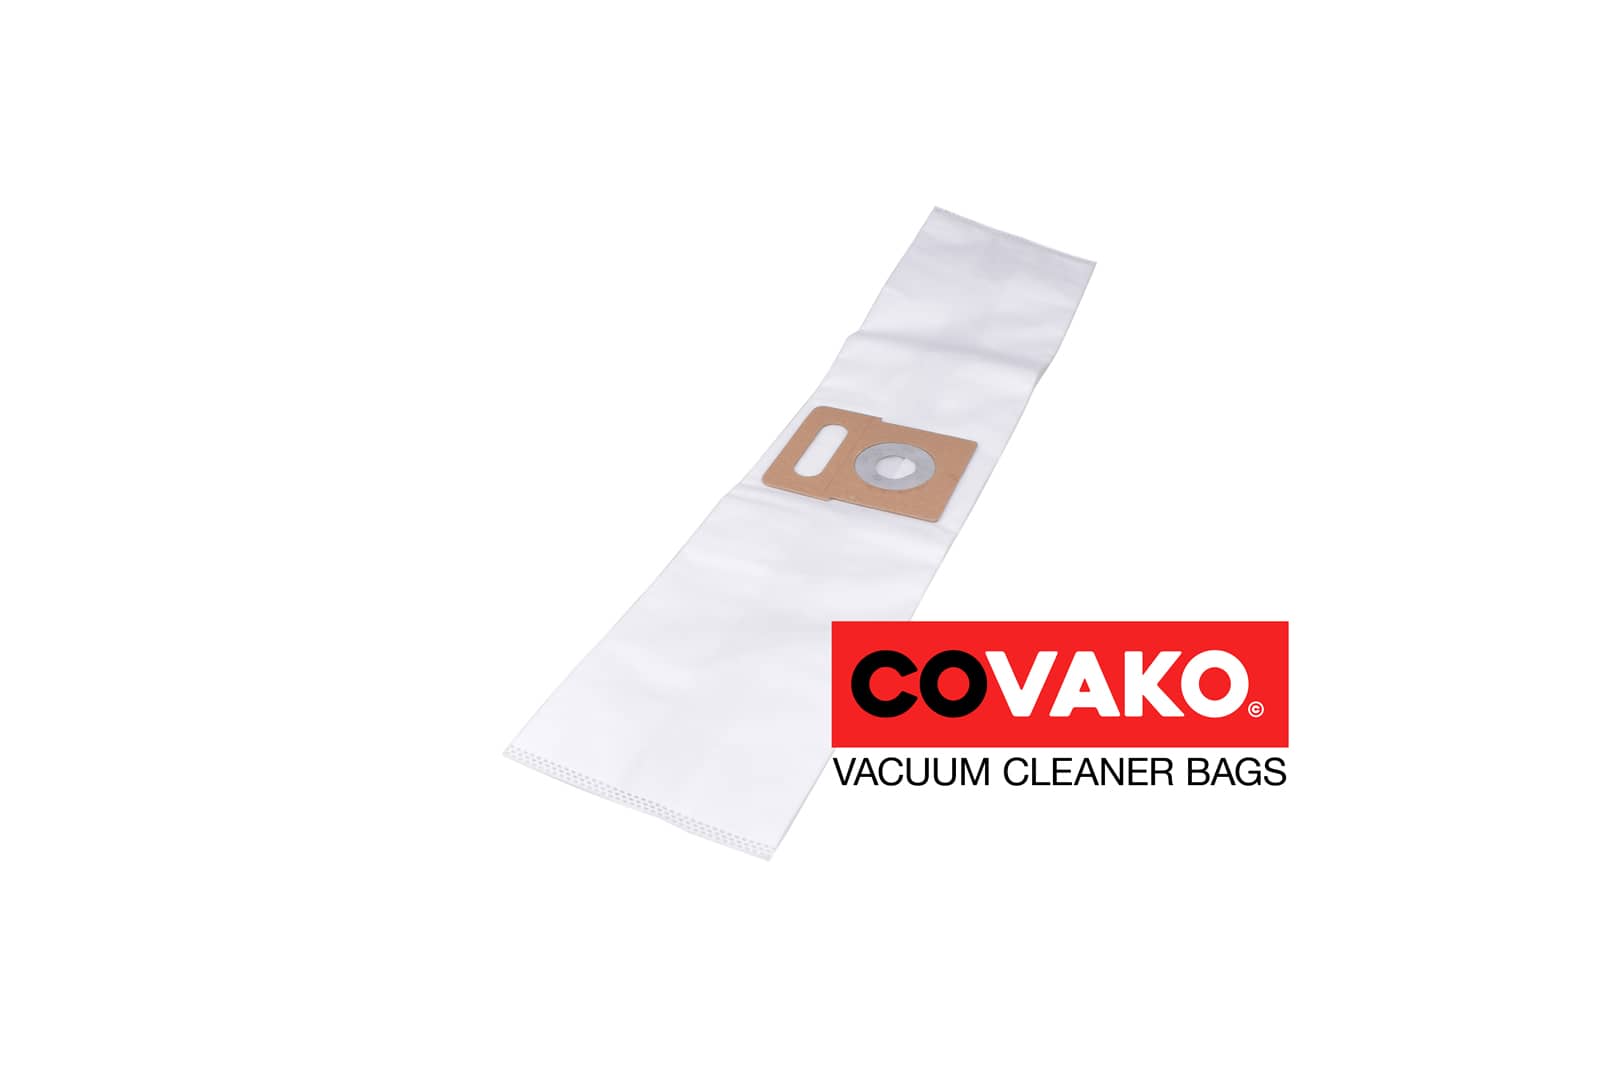 Clean a la Card 643533 / Synthesis - Clean a la Card vacuum cleaner bags